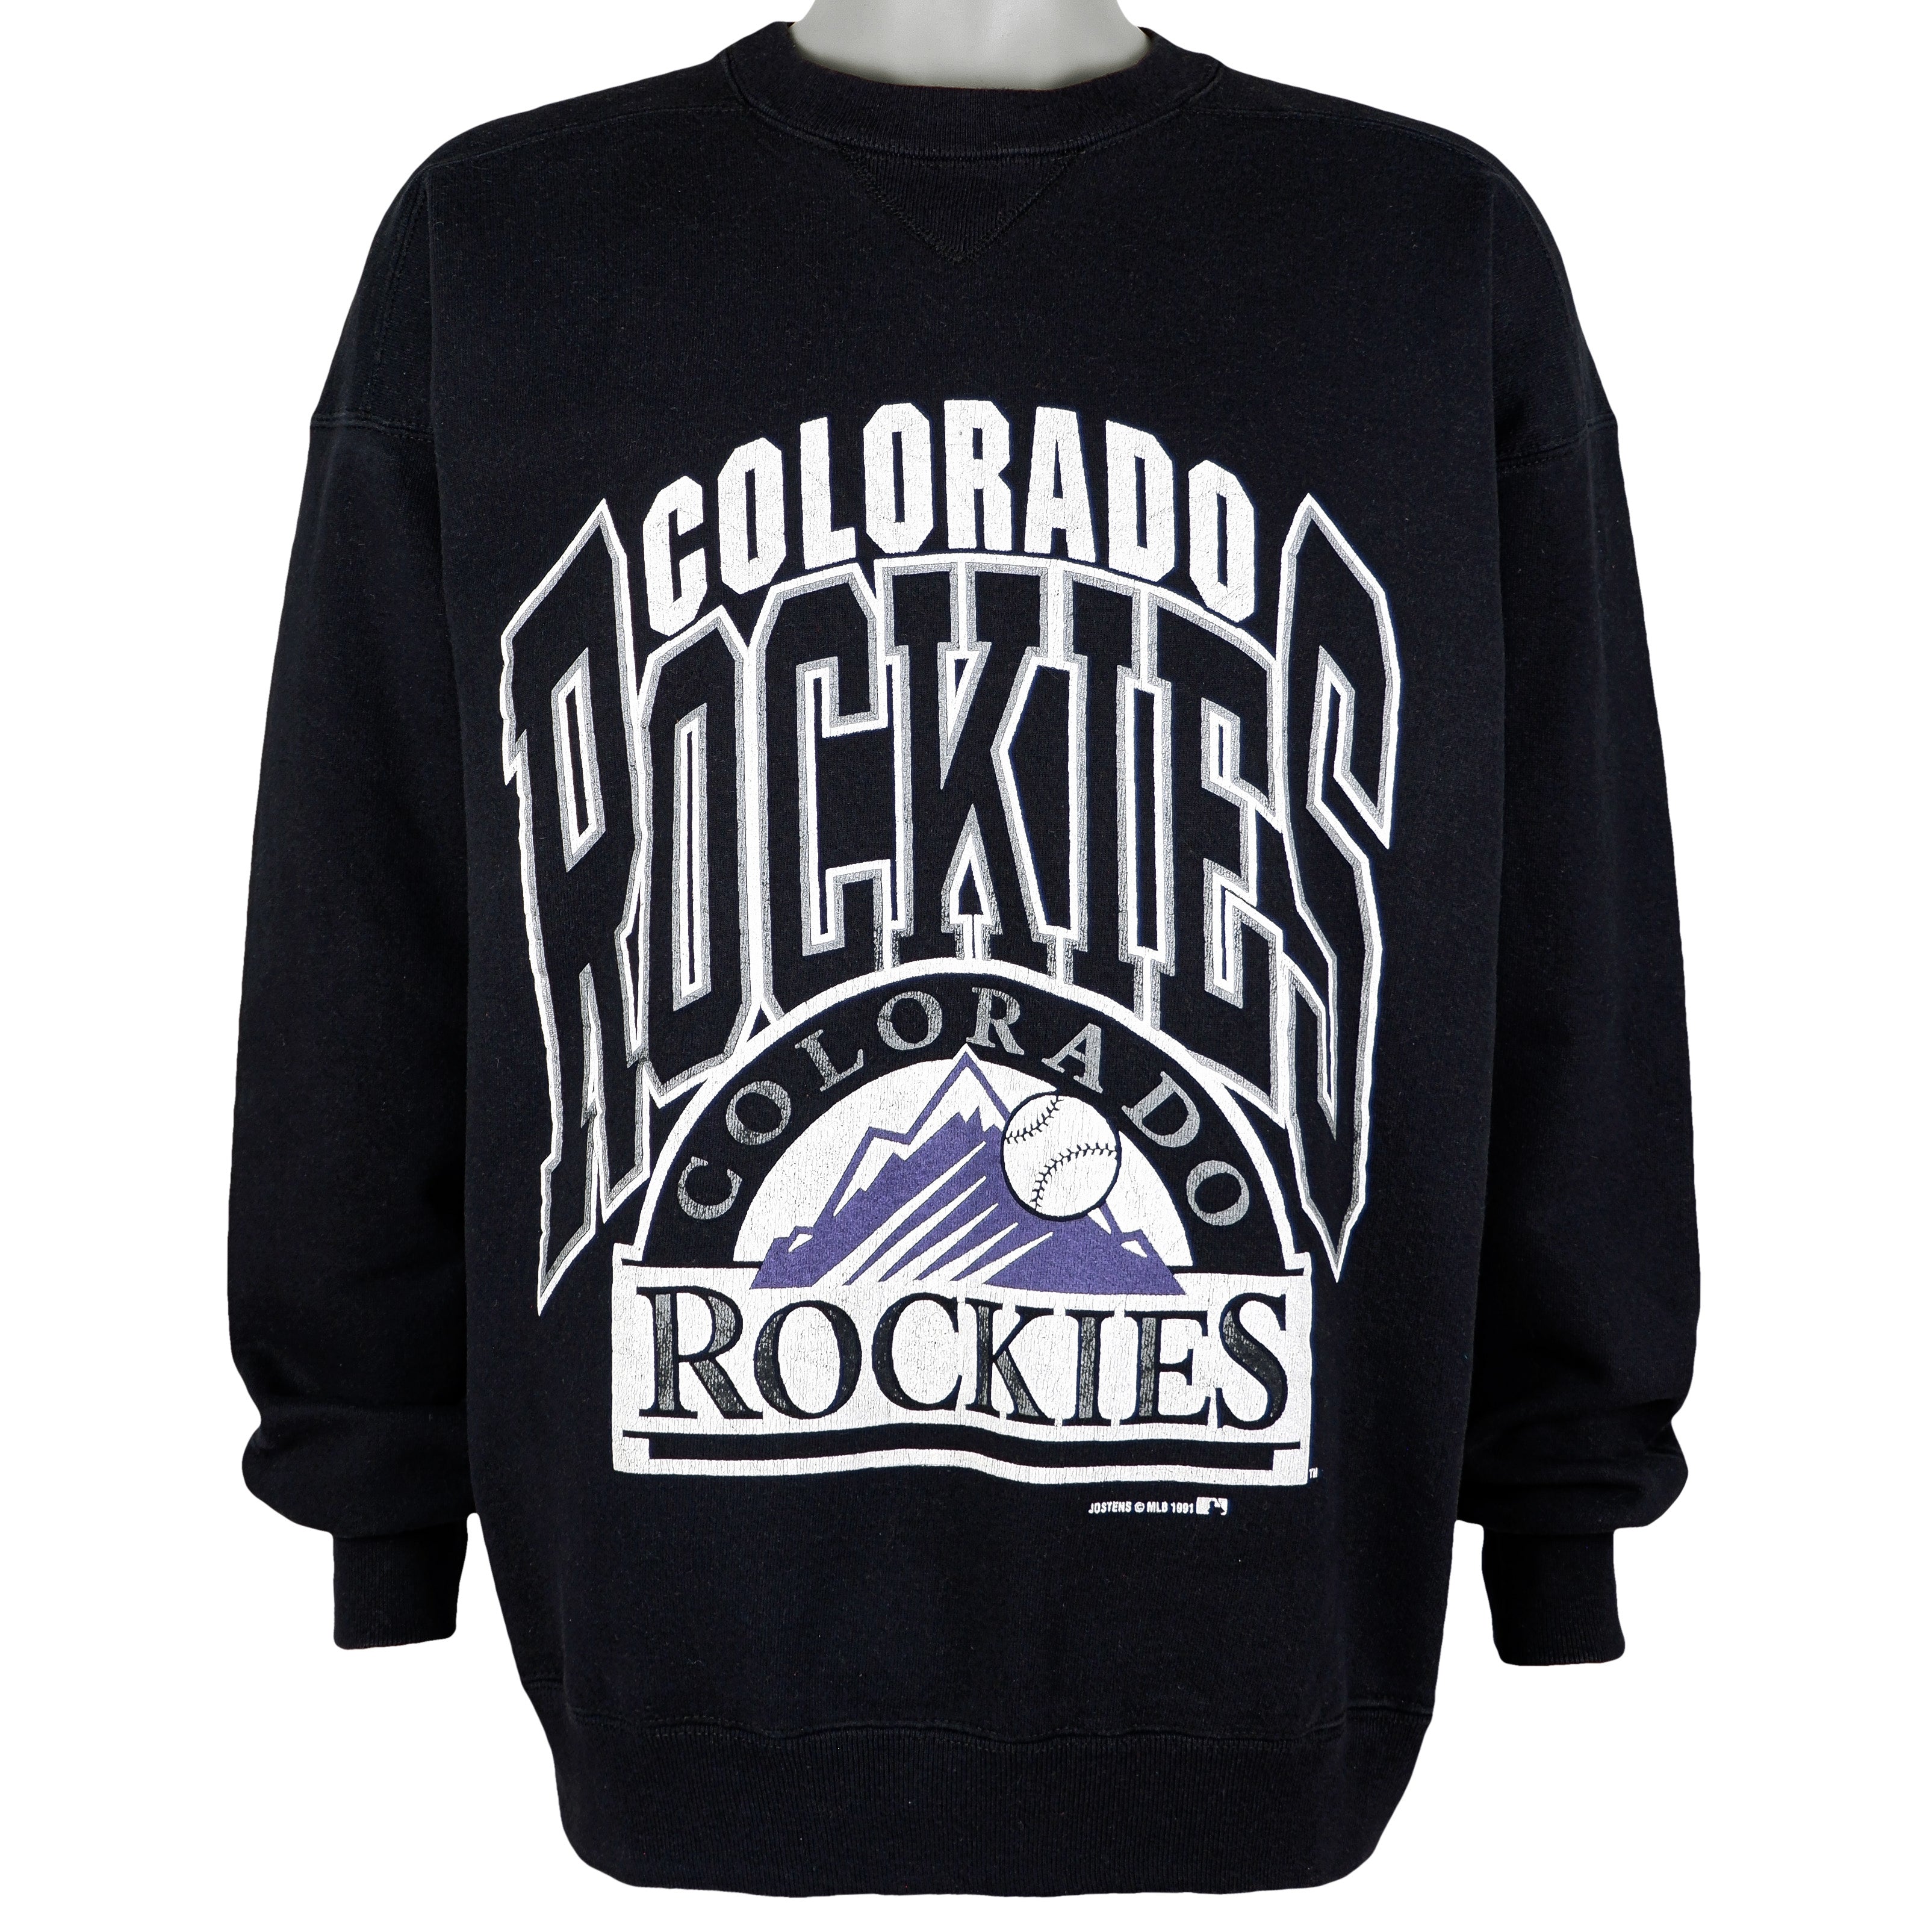 New Vintage Deadstock Colorado rockies Tshirt 1994 Tshirt Tee